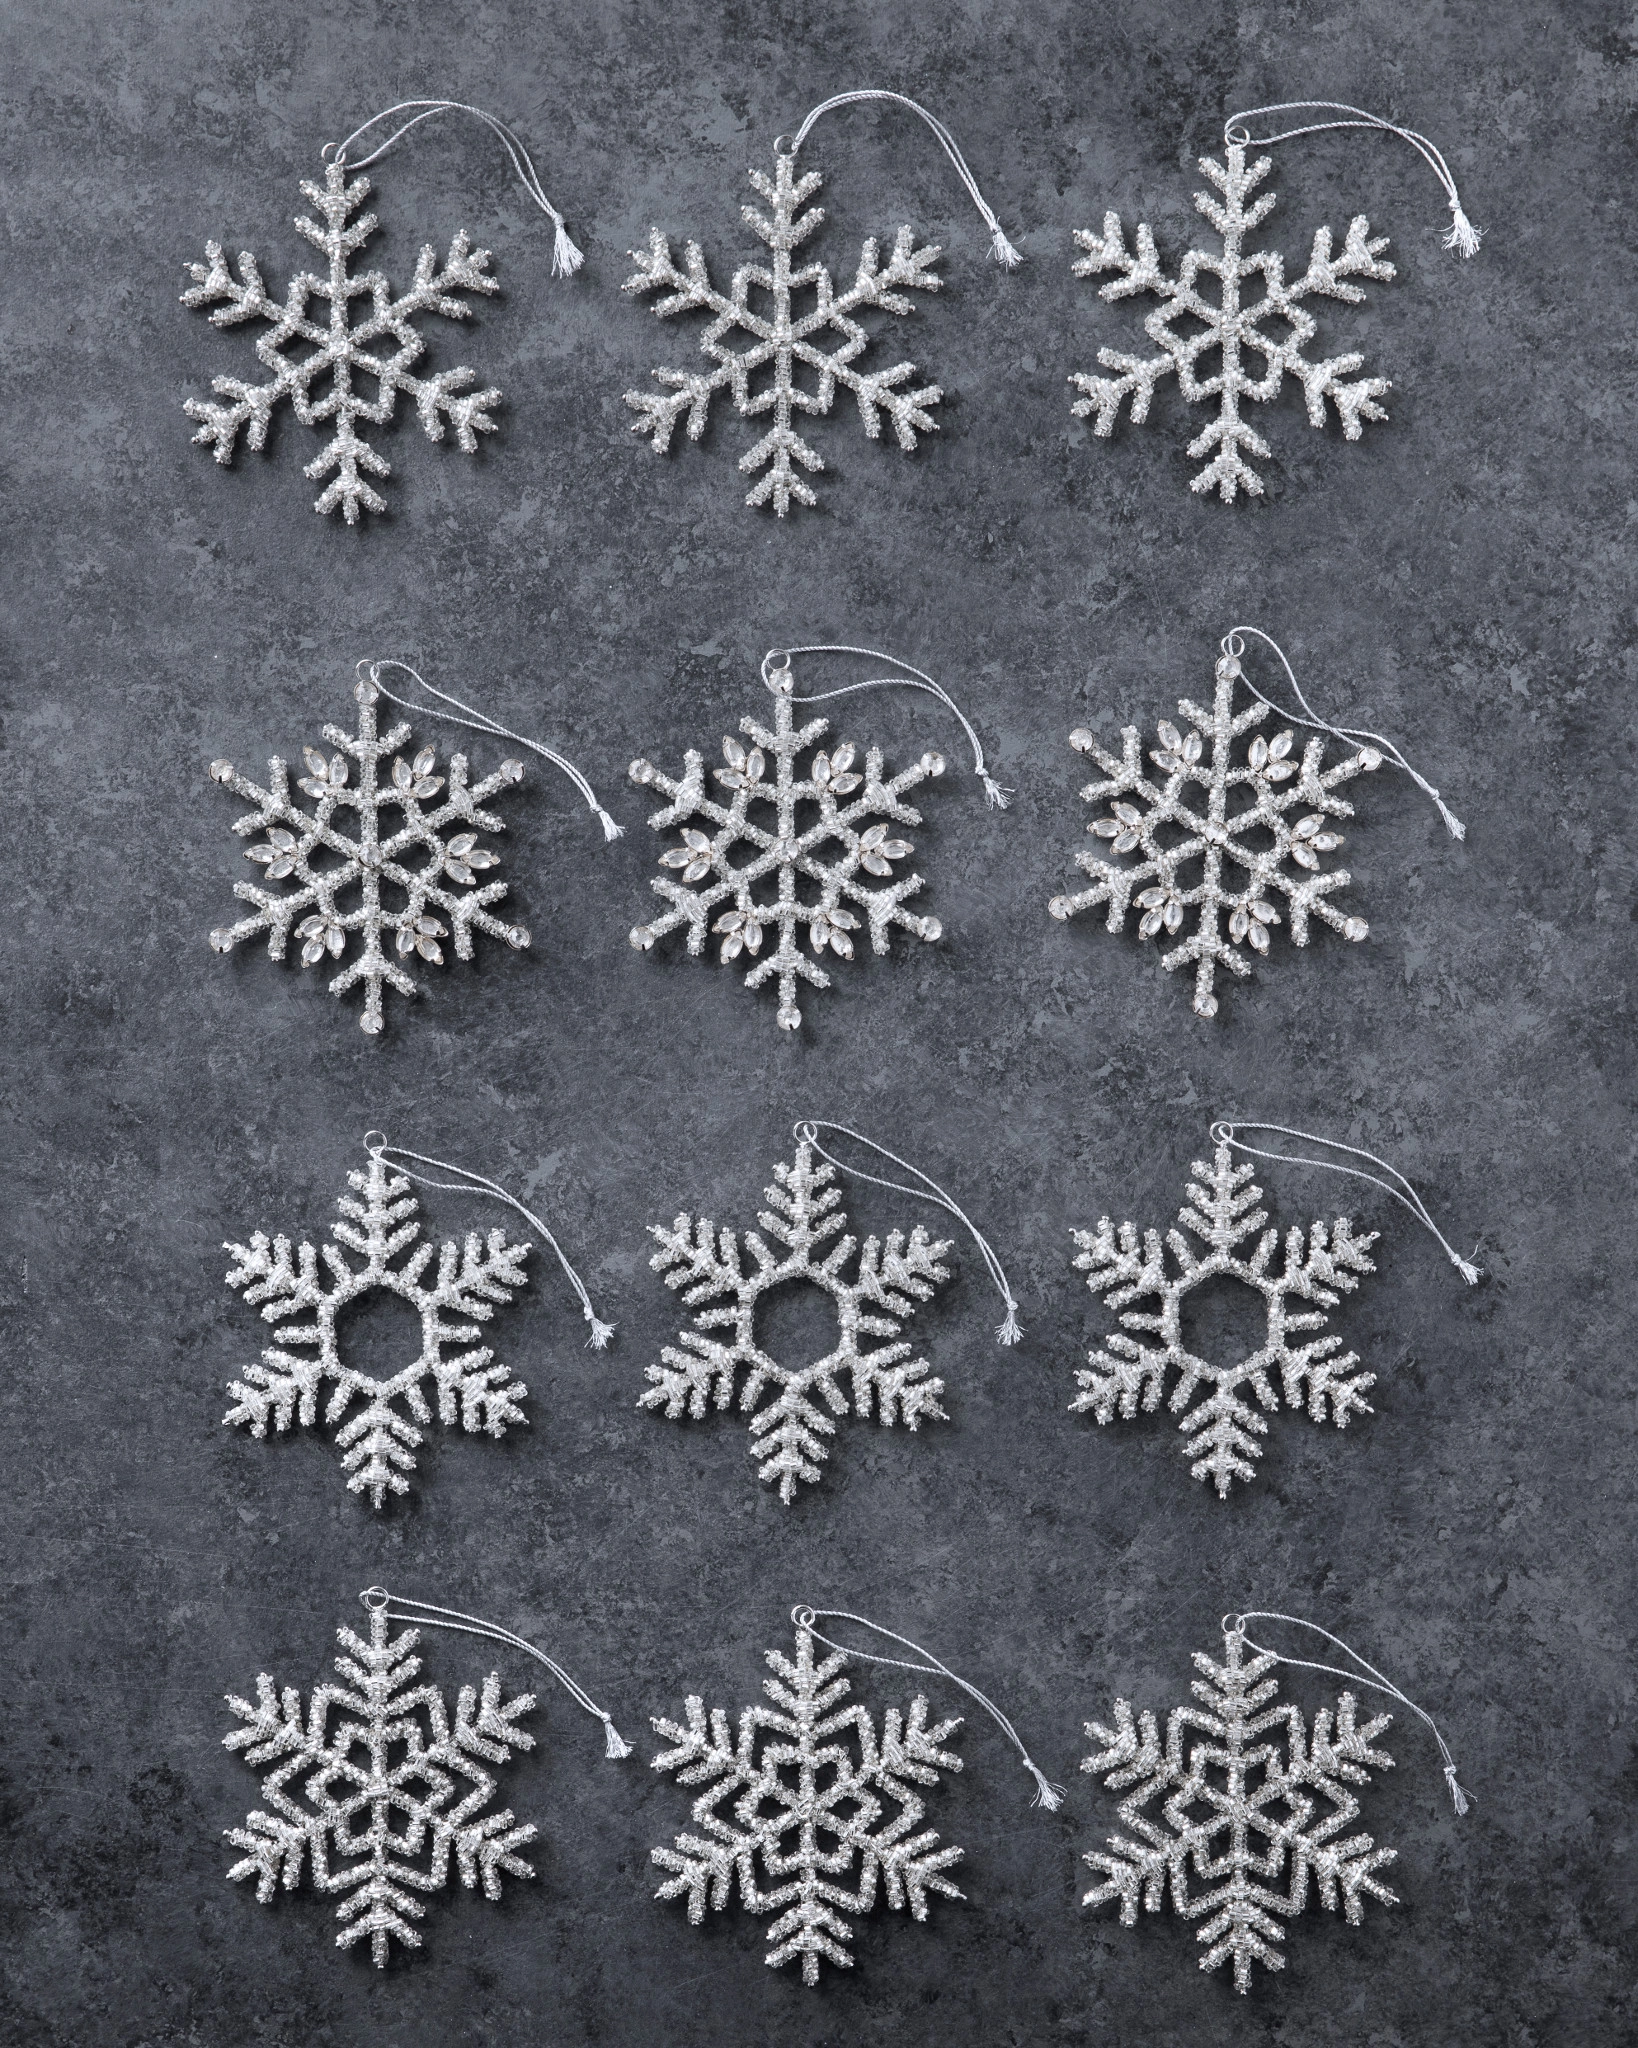  Large Snowflakes - Set of 5 White Glittered Snowflakes